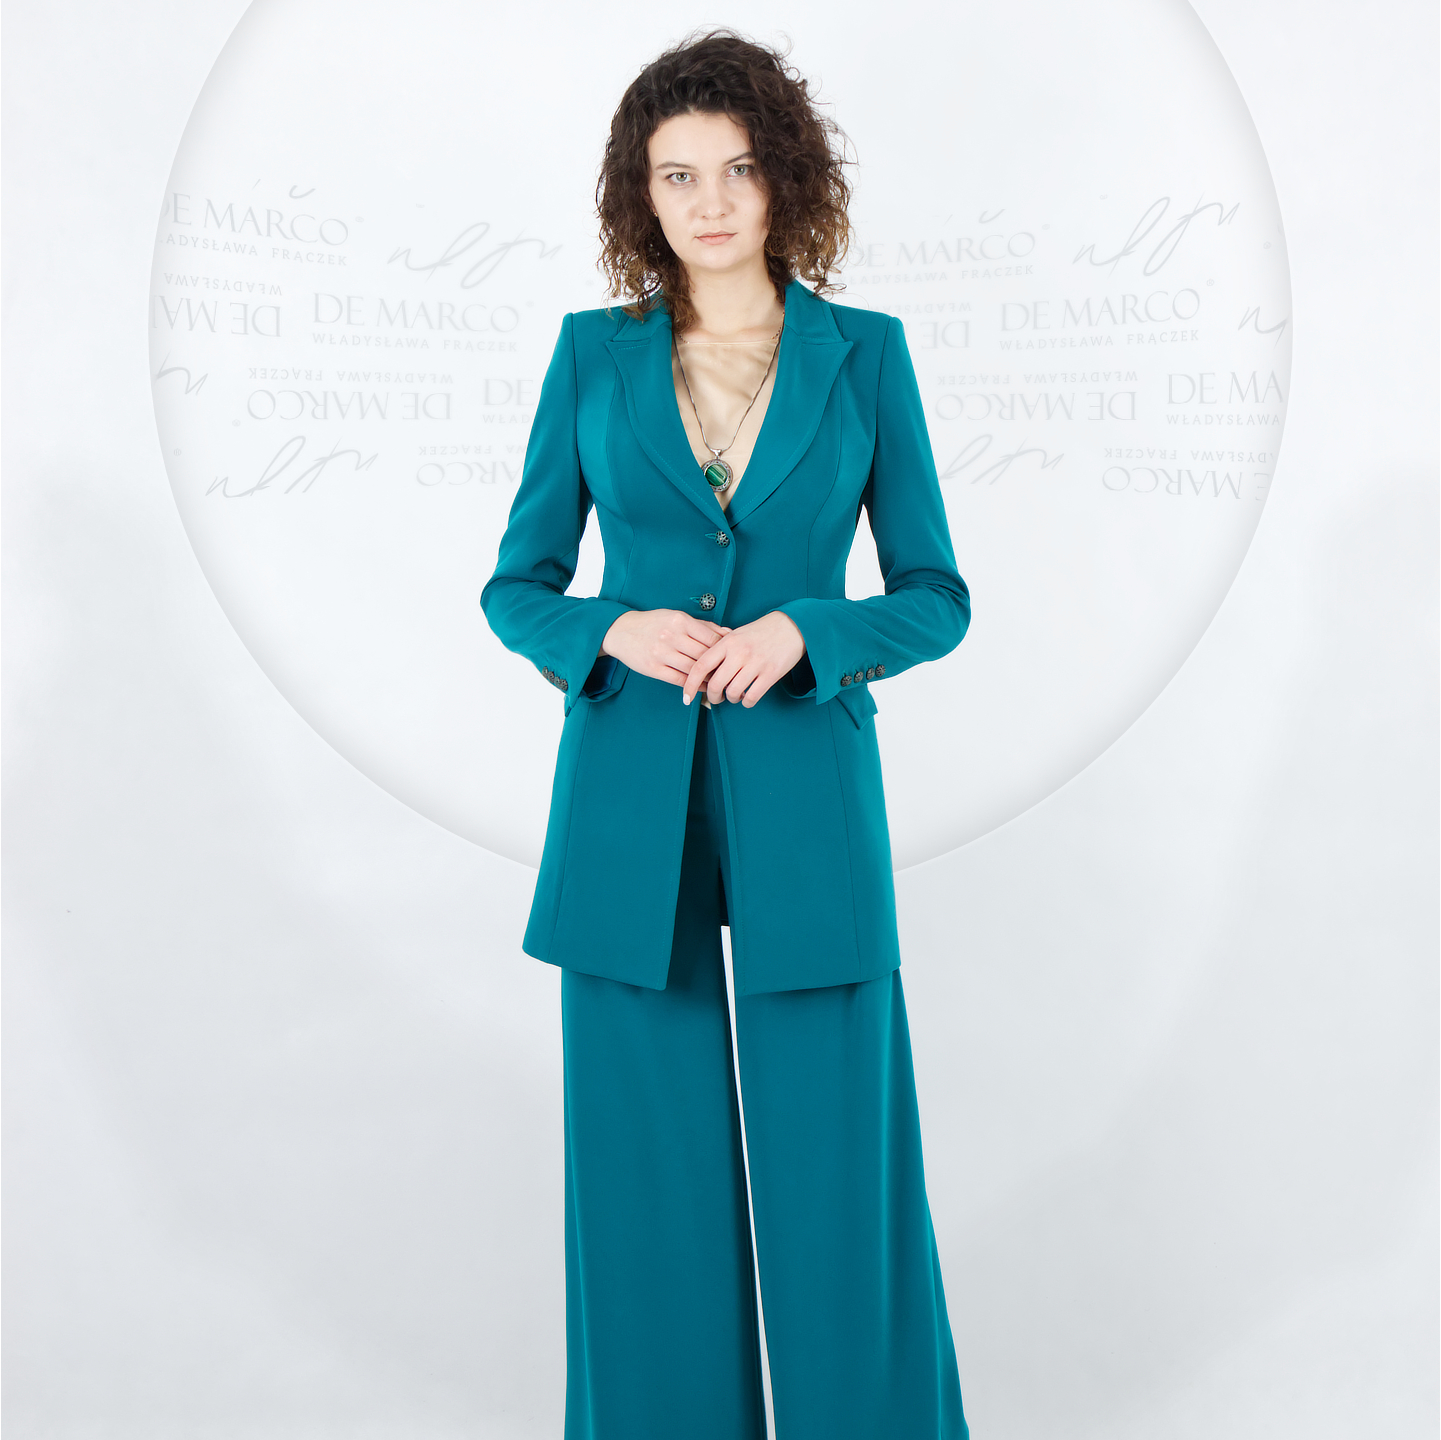 Fashionable ladies’ formal suits De Marco Polish luxury brand